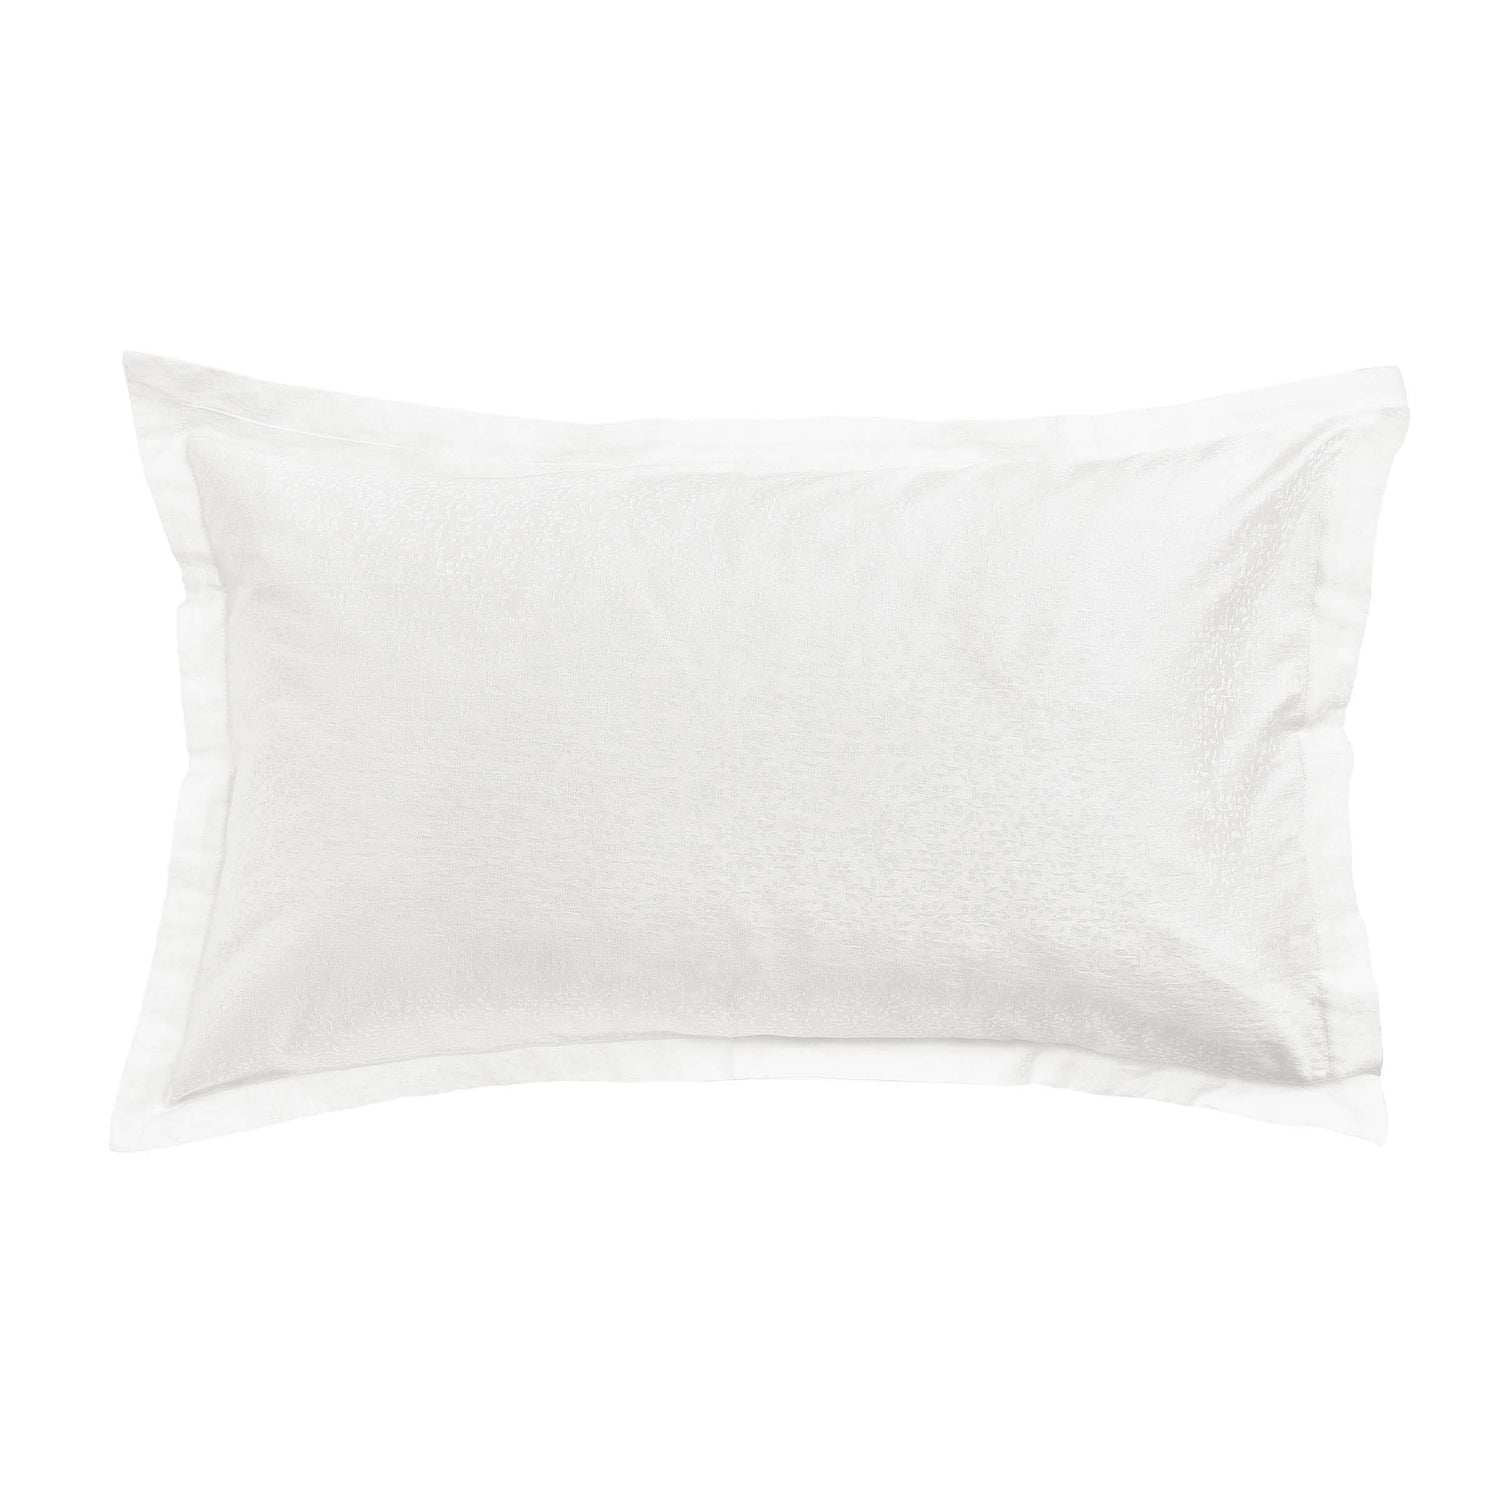 White Jacquard Patterned Murmur Oxford Pillowcase